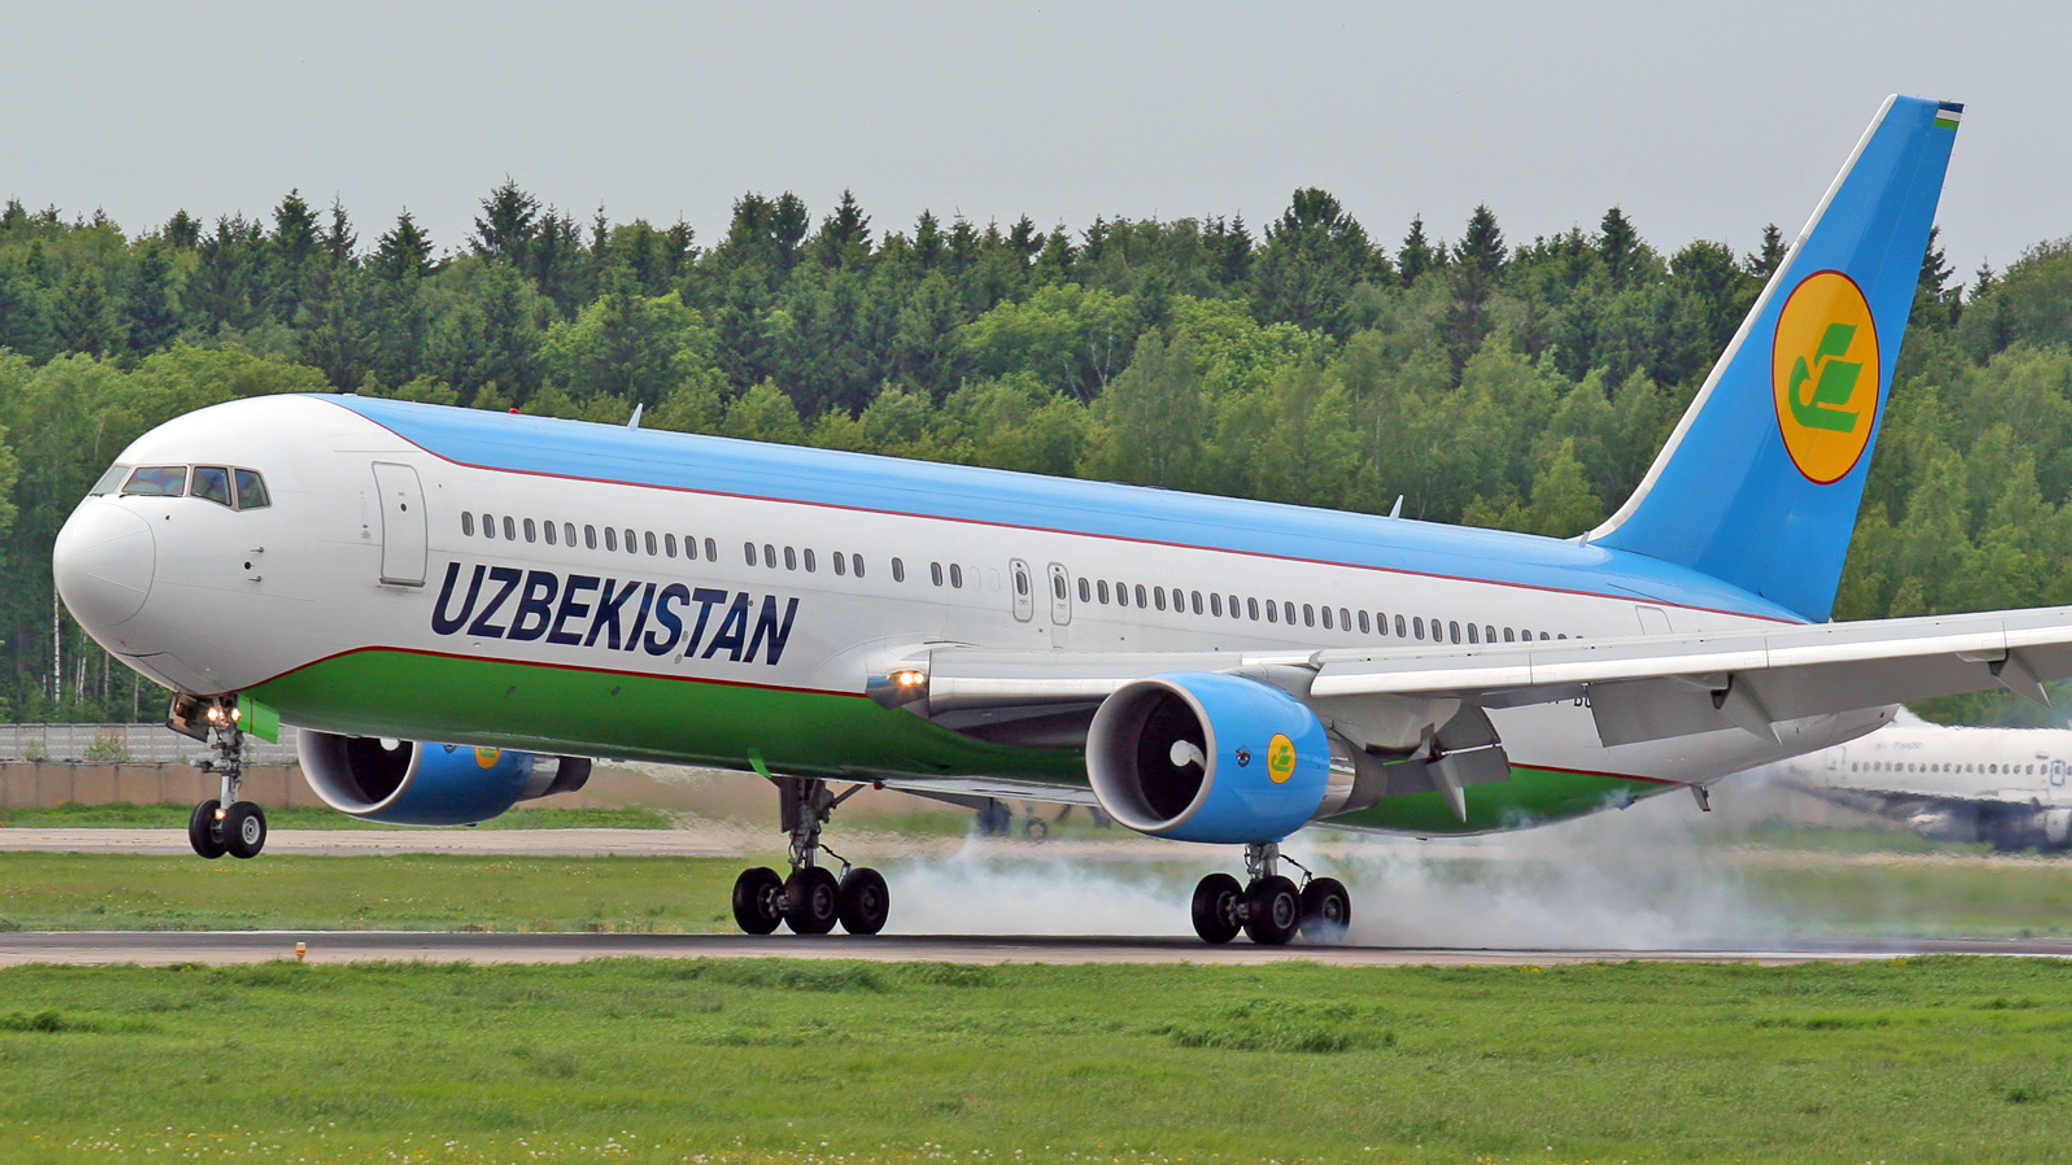 Узбекистон хаво йуллари. Боинг 767-300 Uzbekistan Airways. Узбекские авиалинии Boeing 767-300er. 777 300 Боинг Uzbekistan Airways. Самолет Узбекистан хаво йуллари.